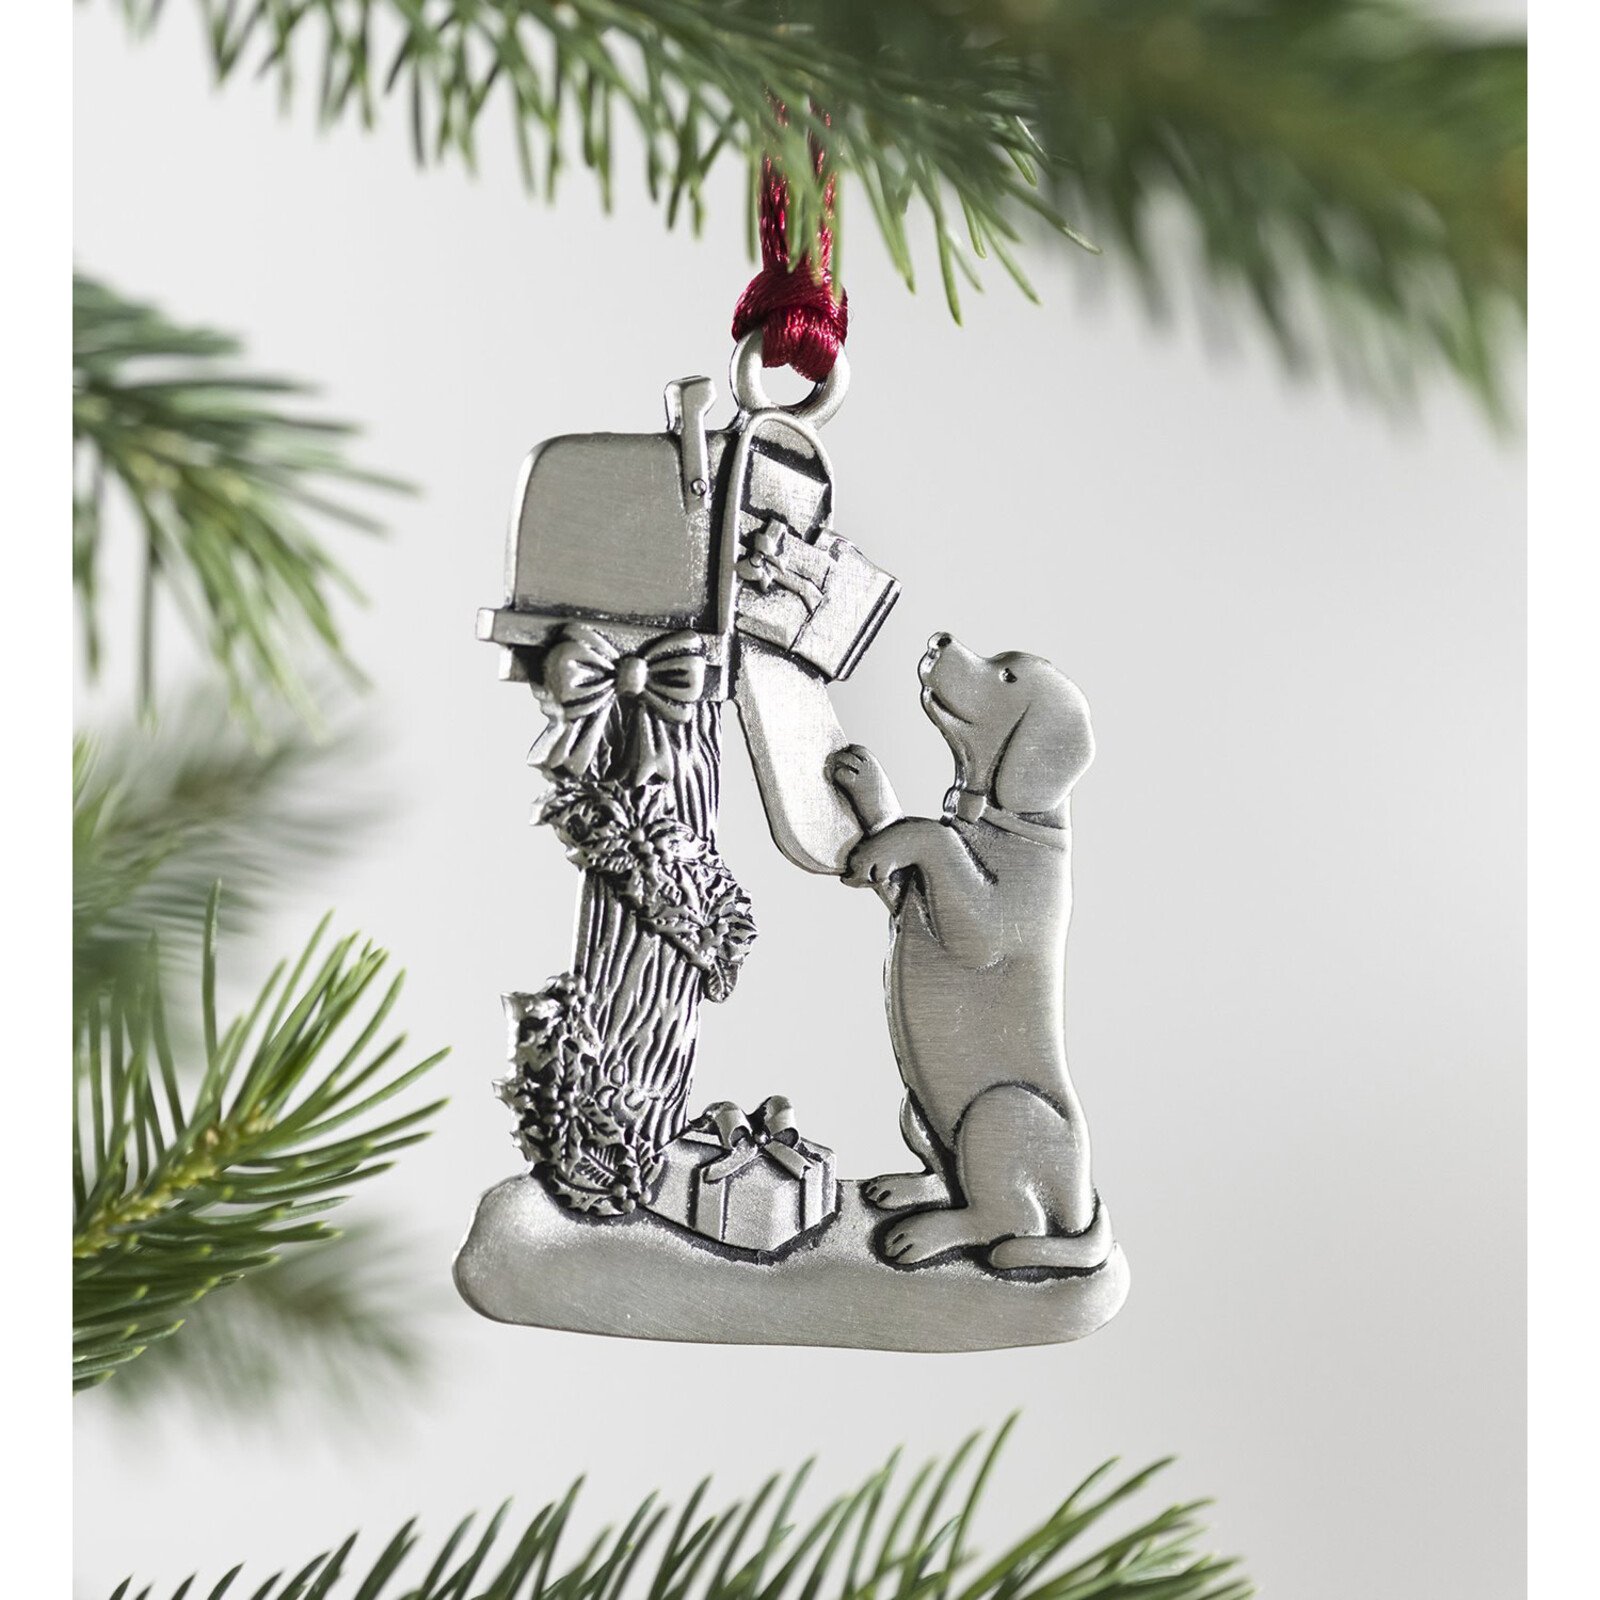 Evergreen Enterprises Solid  Pewter Christmas Tree Ornament DOG  65M27DOG loading=